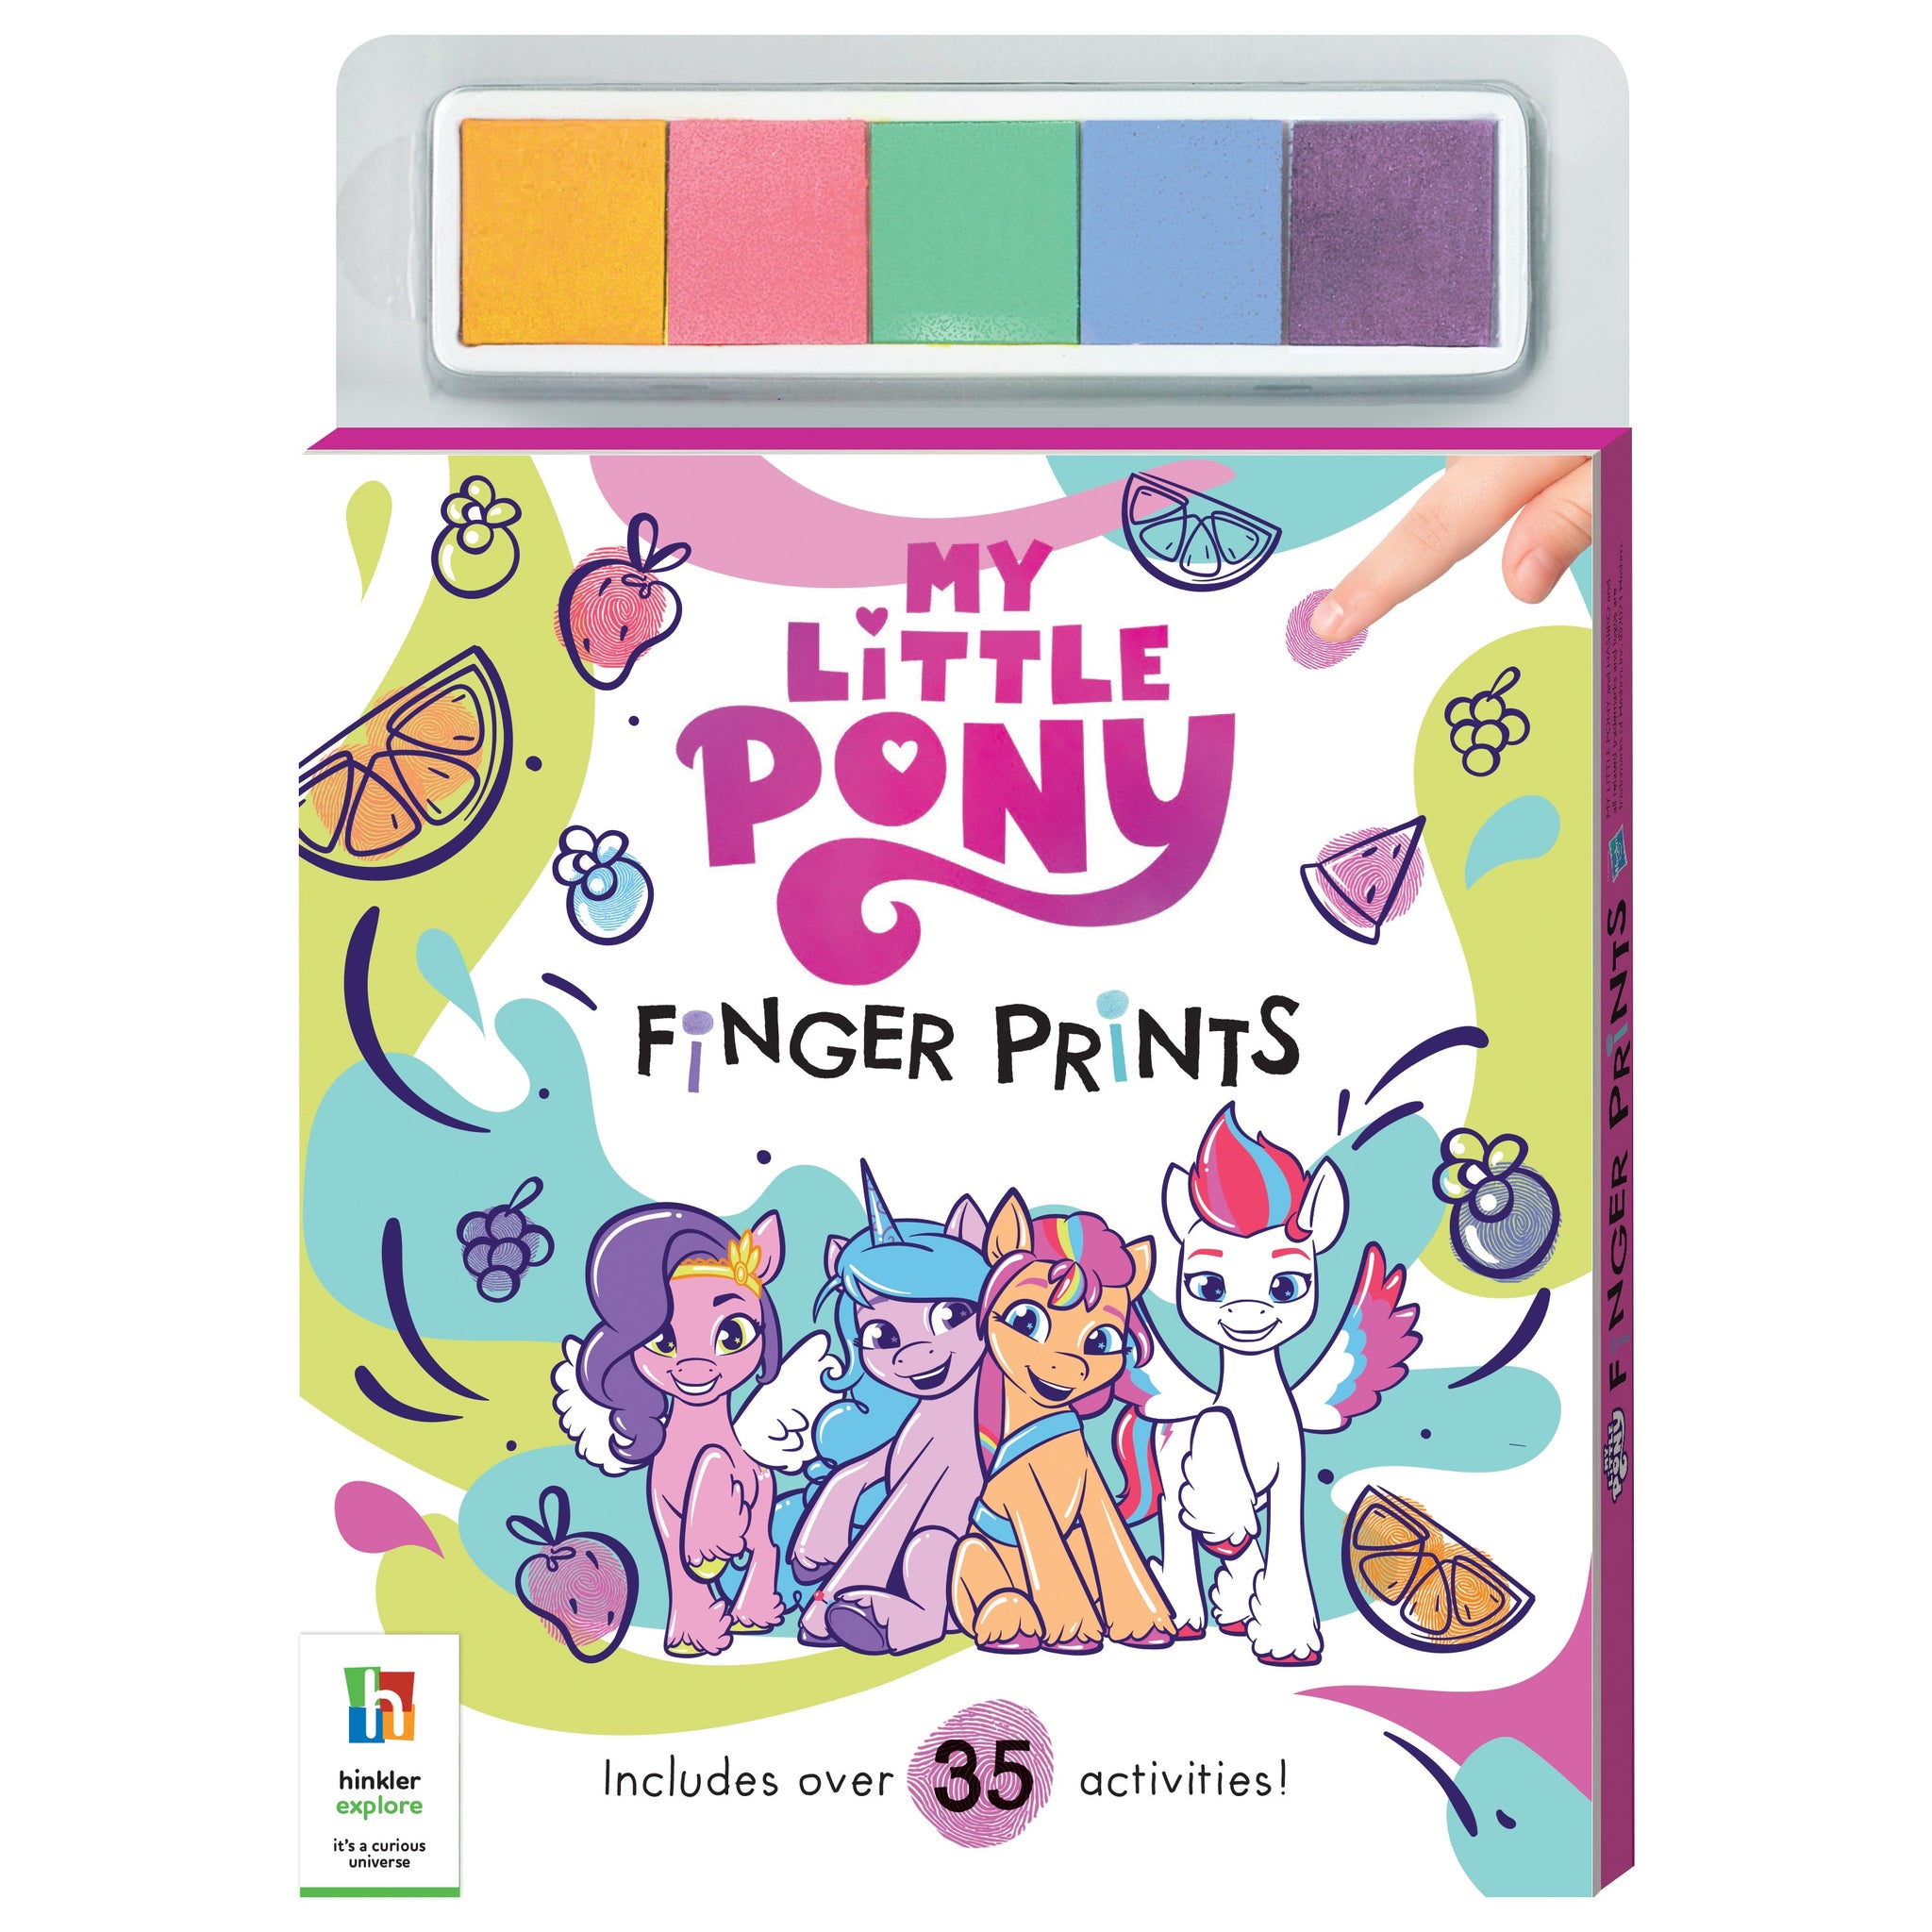 My Little Pony Finger Prints